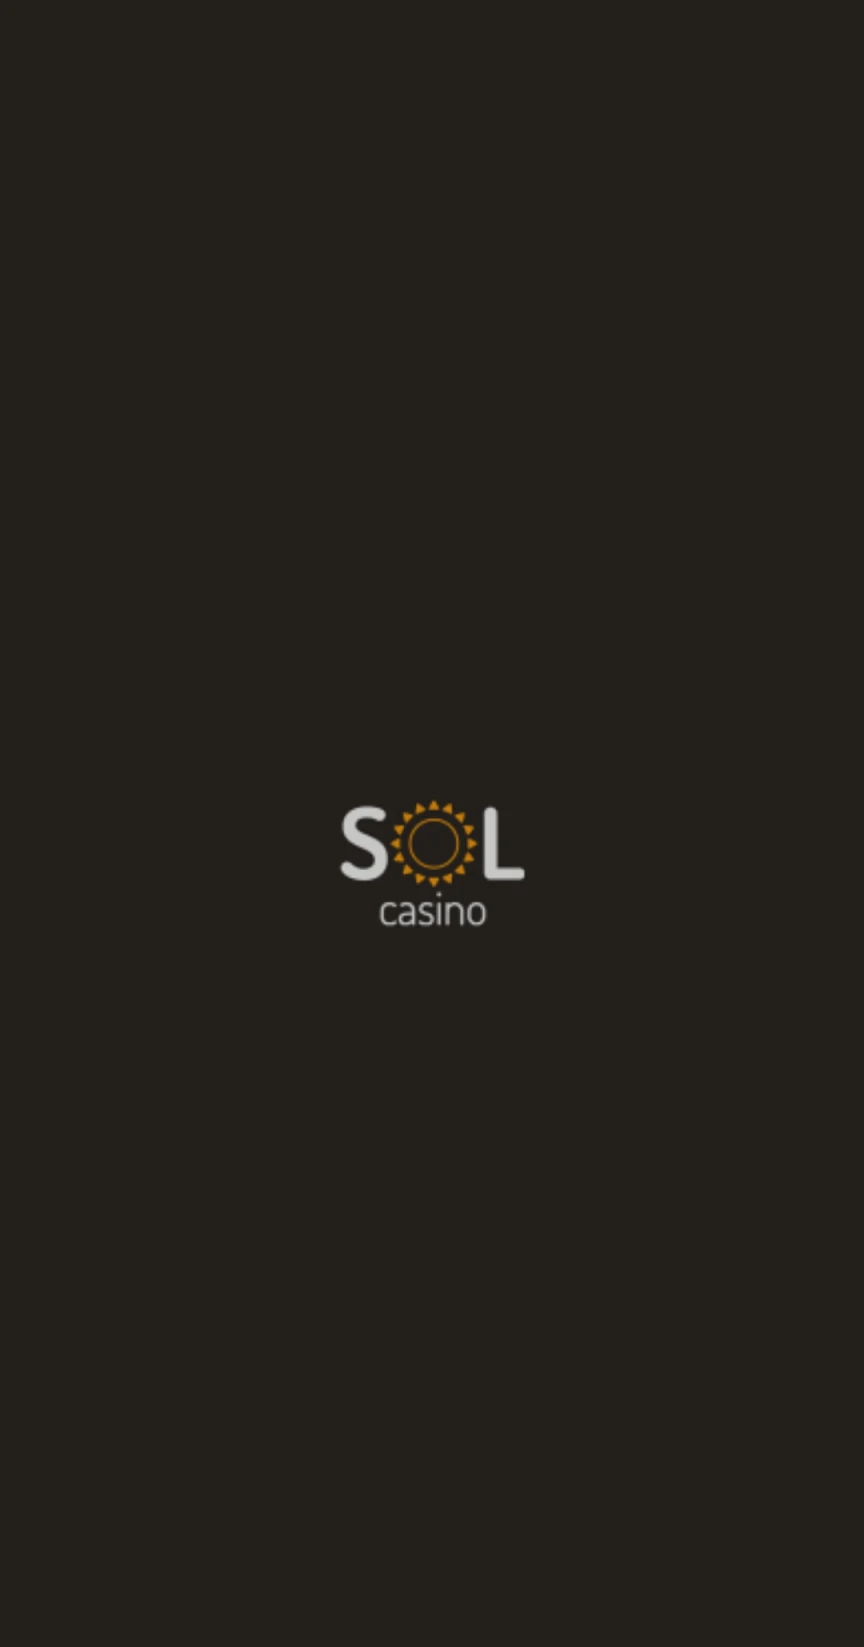 Install the Sol Casino app for iOS.